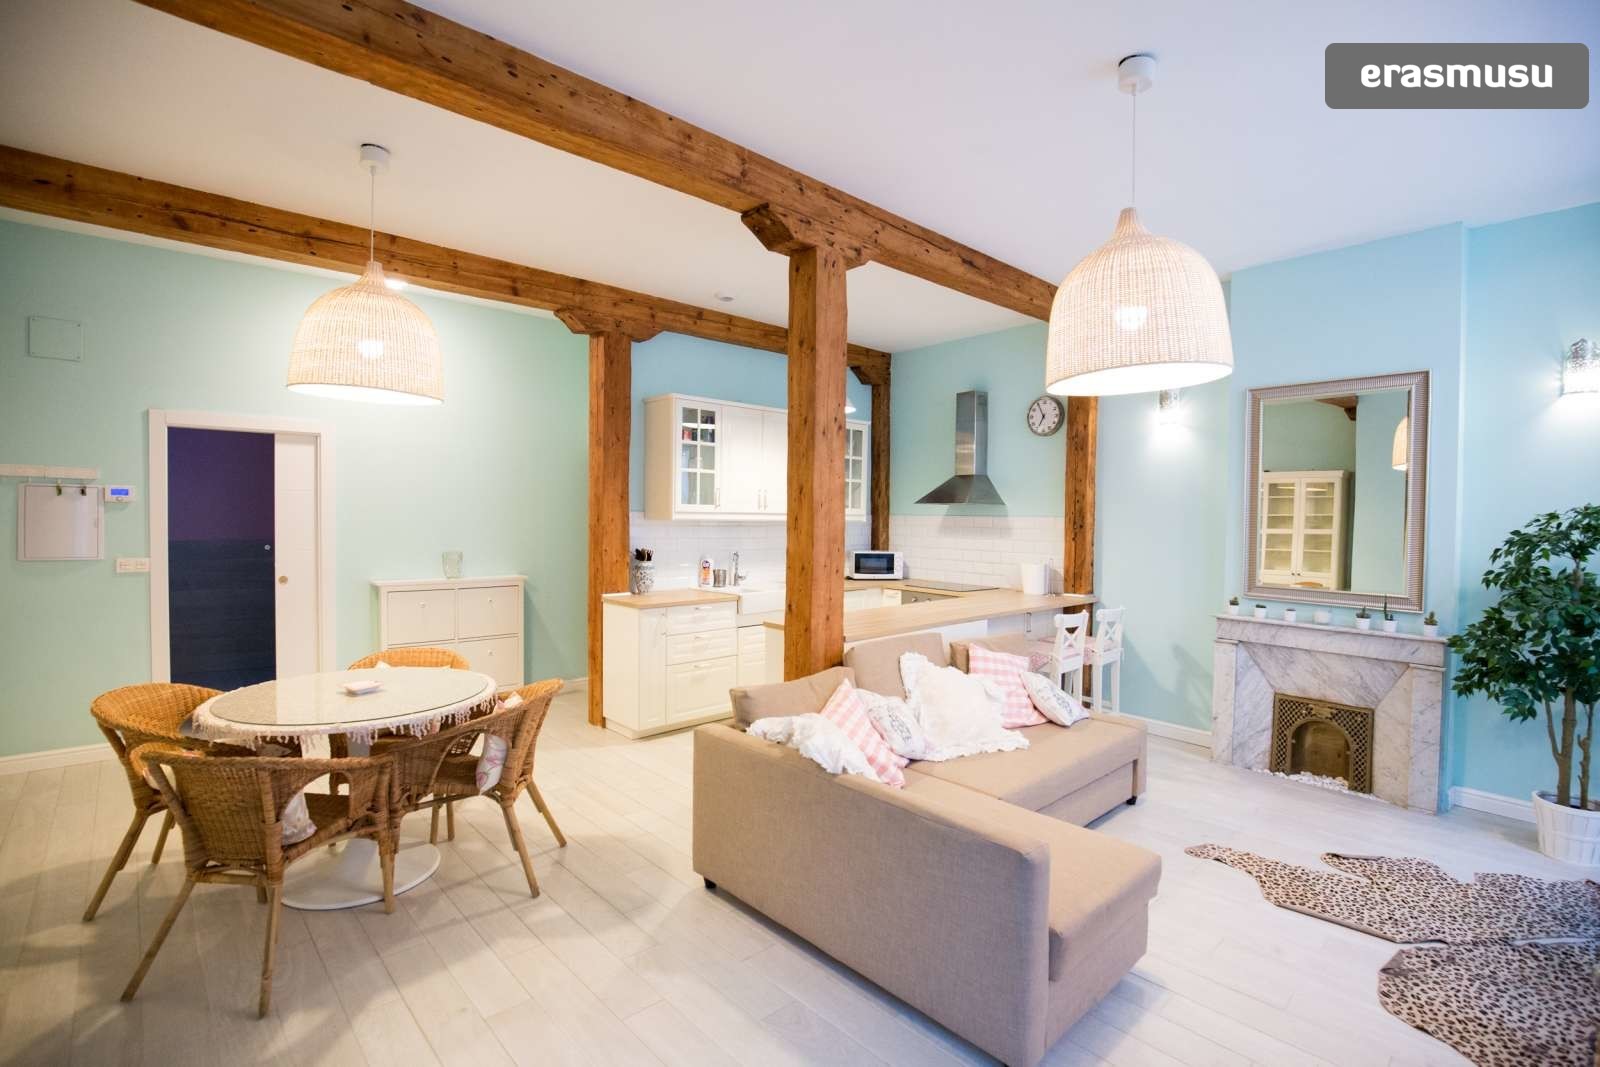 Charming 2 Bedroom Apartment For Rent In San Francisco Flat Rent Bilbao